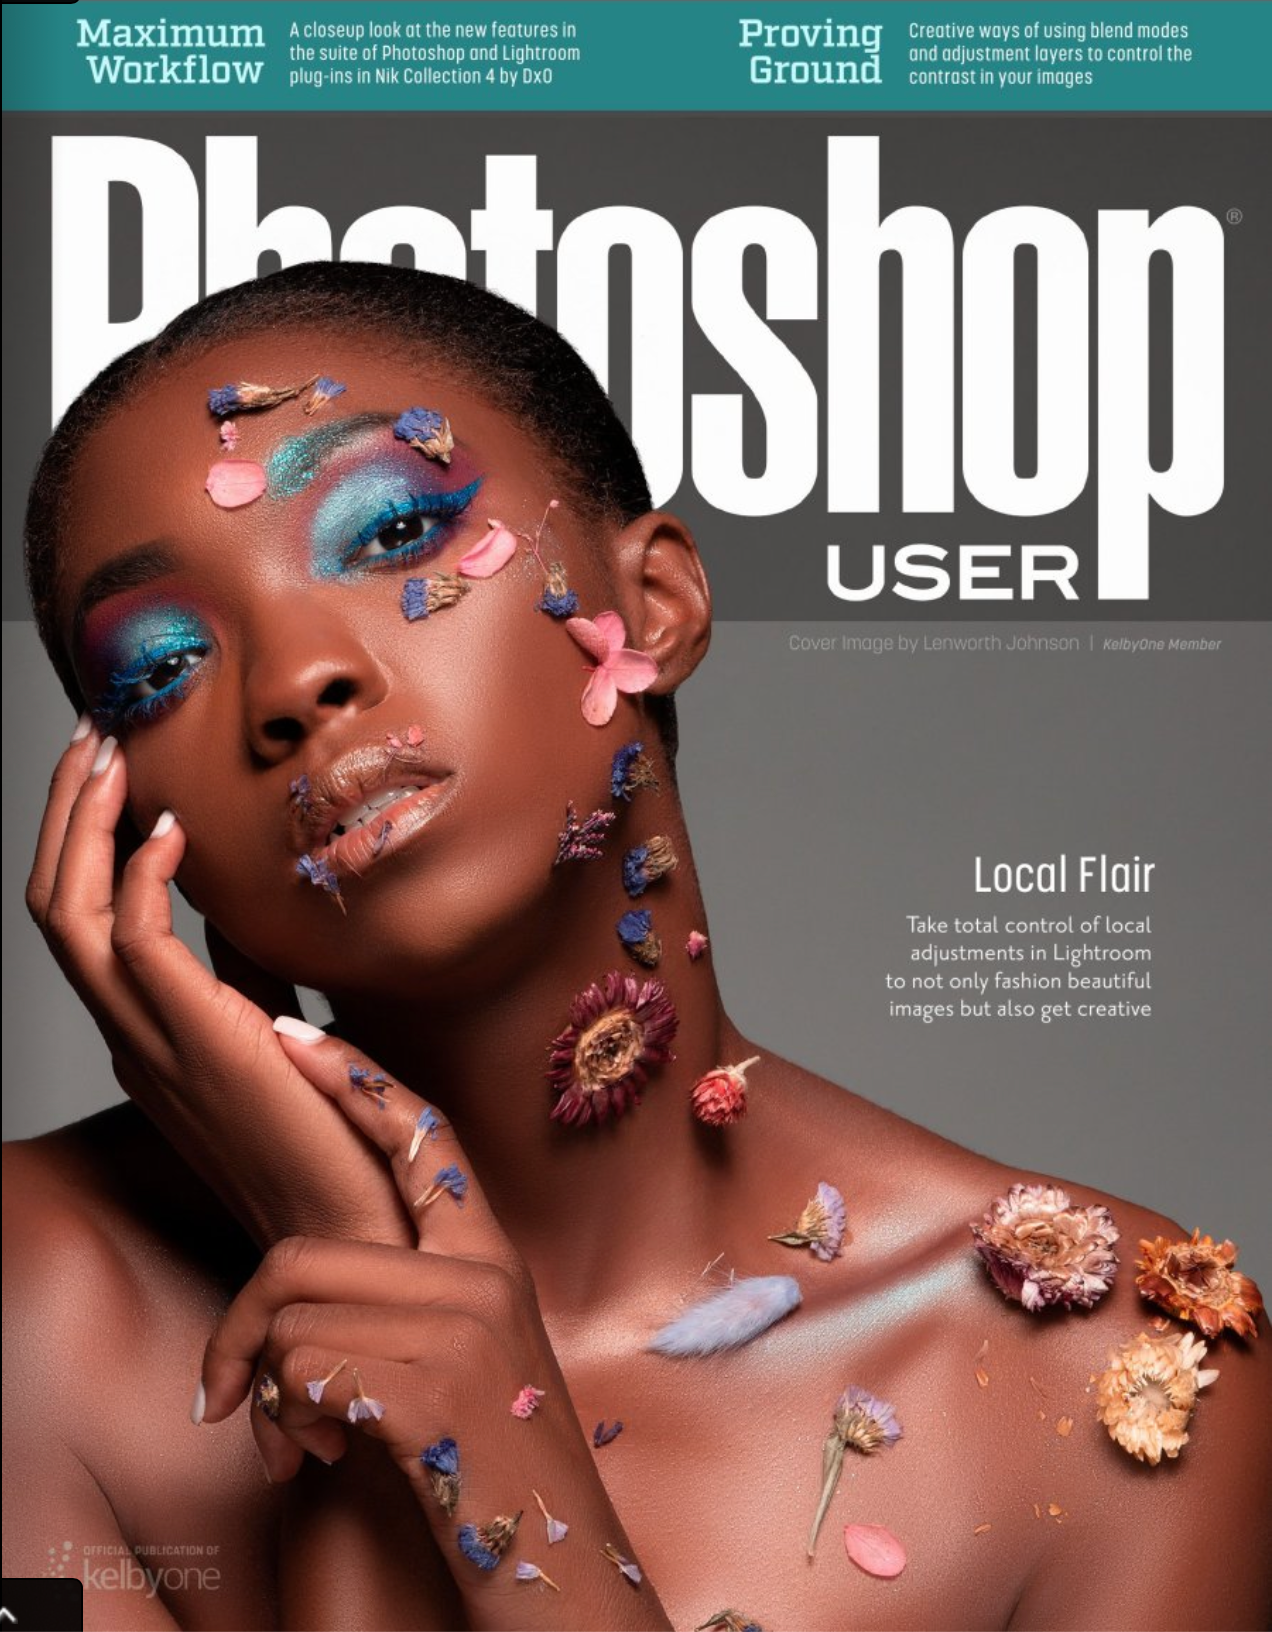 Photoshop user magazine cover with award winning image.